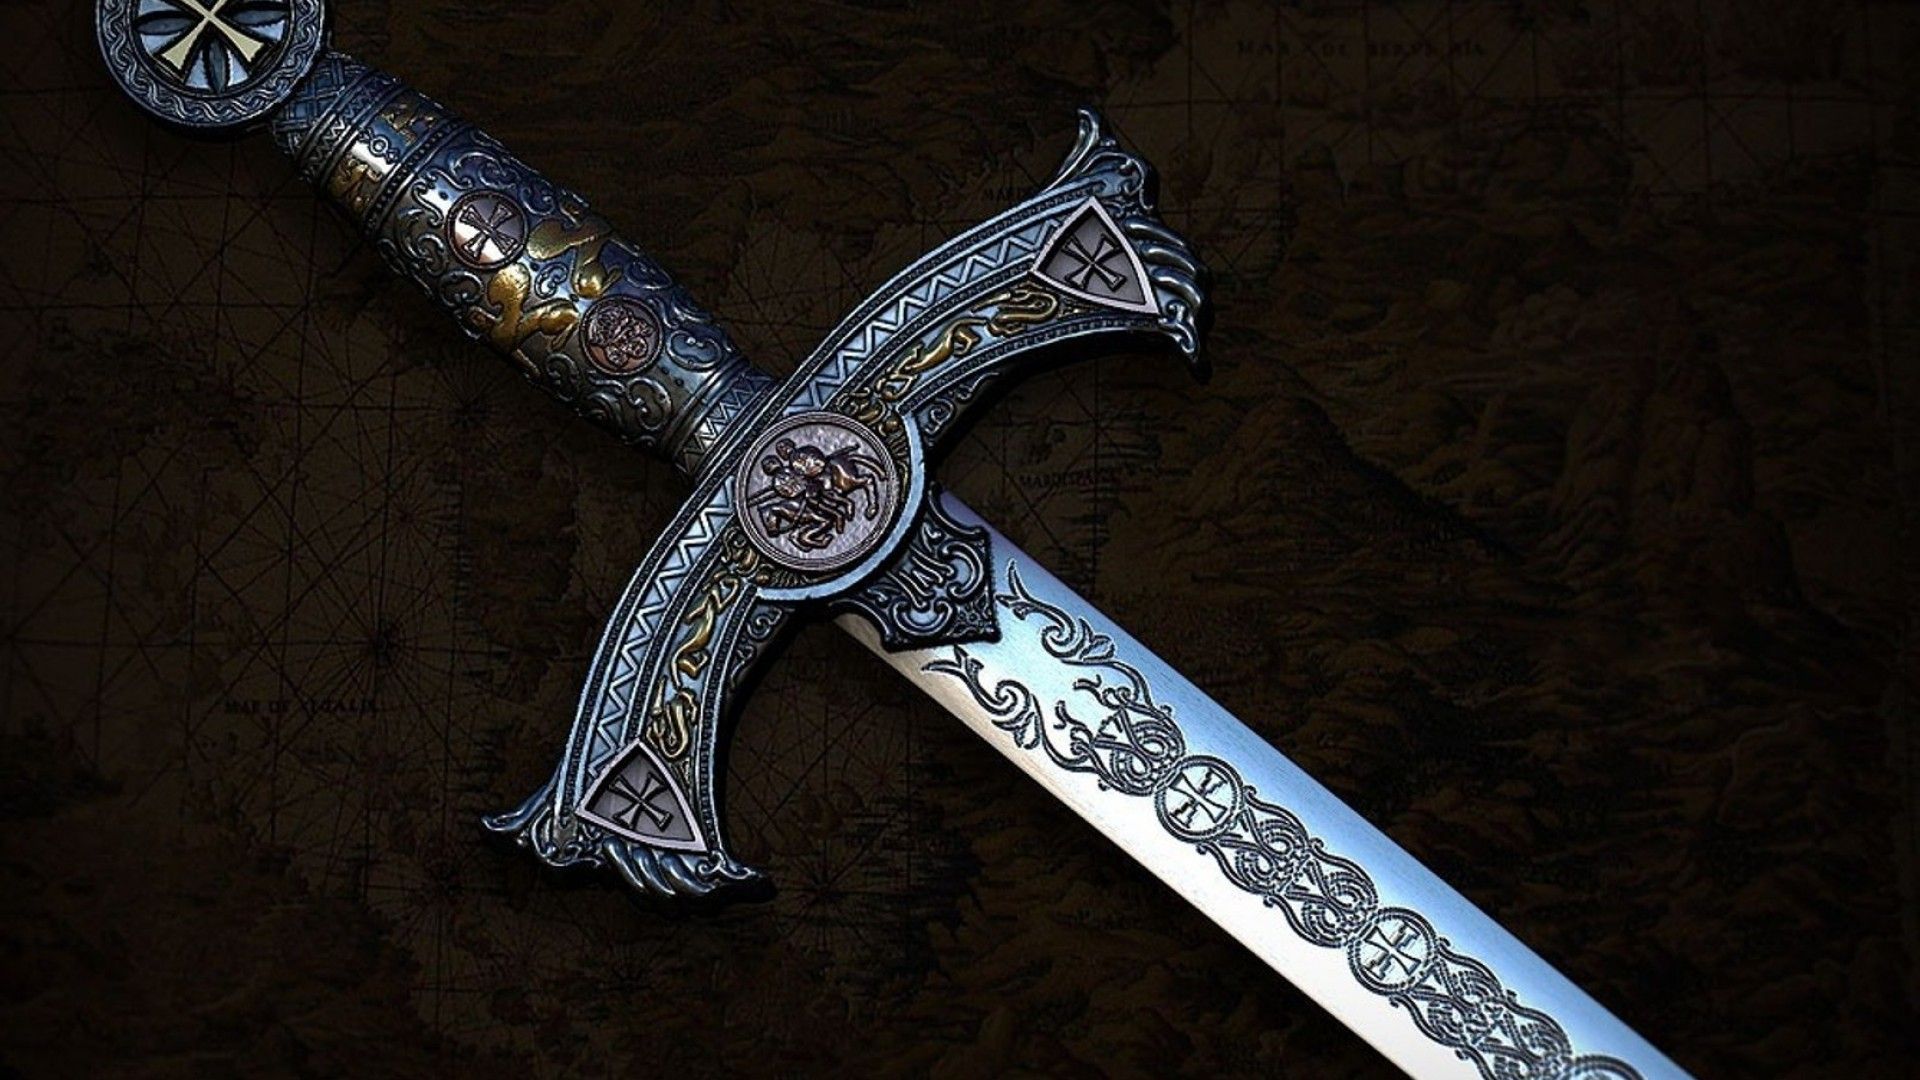 Sword HD Wallpaper, Sword Backgrounds, Sword Images, New Backgrounds